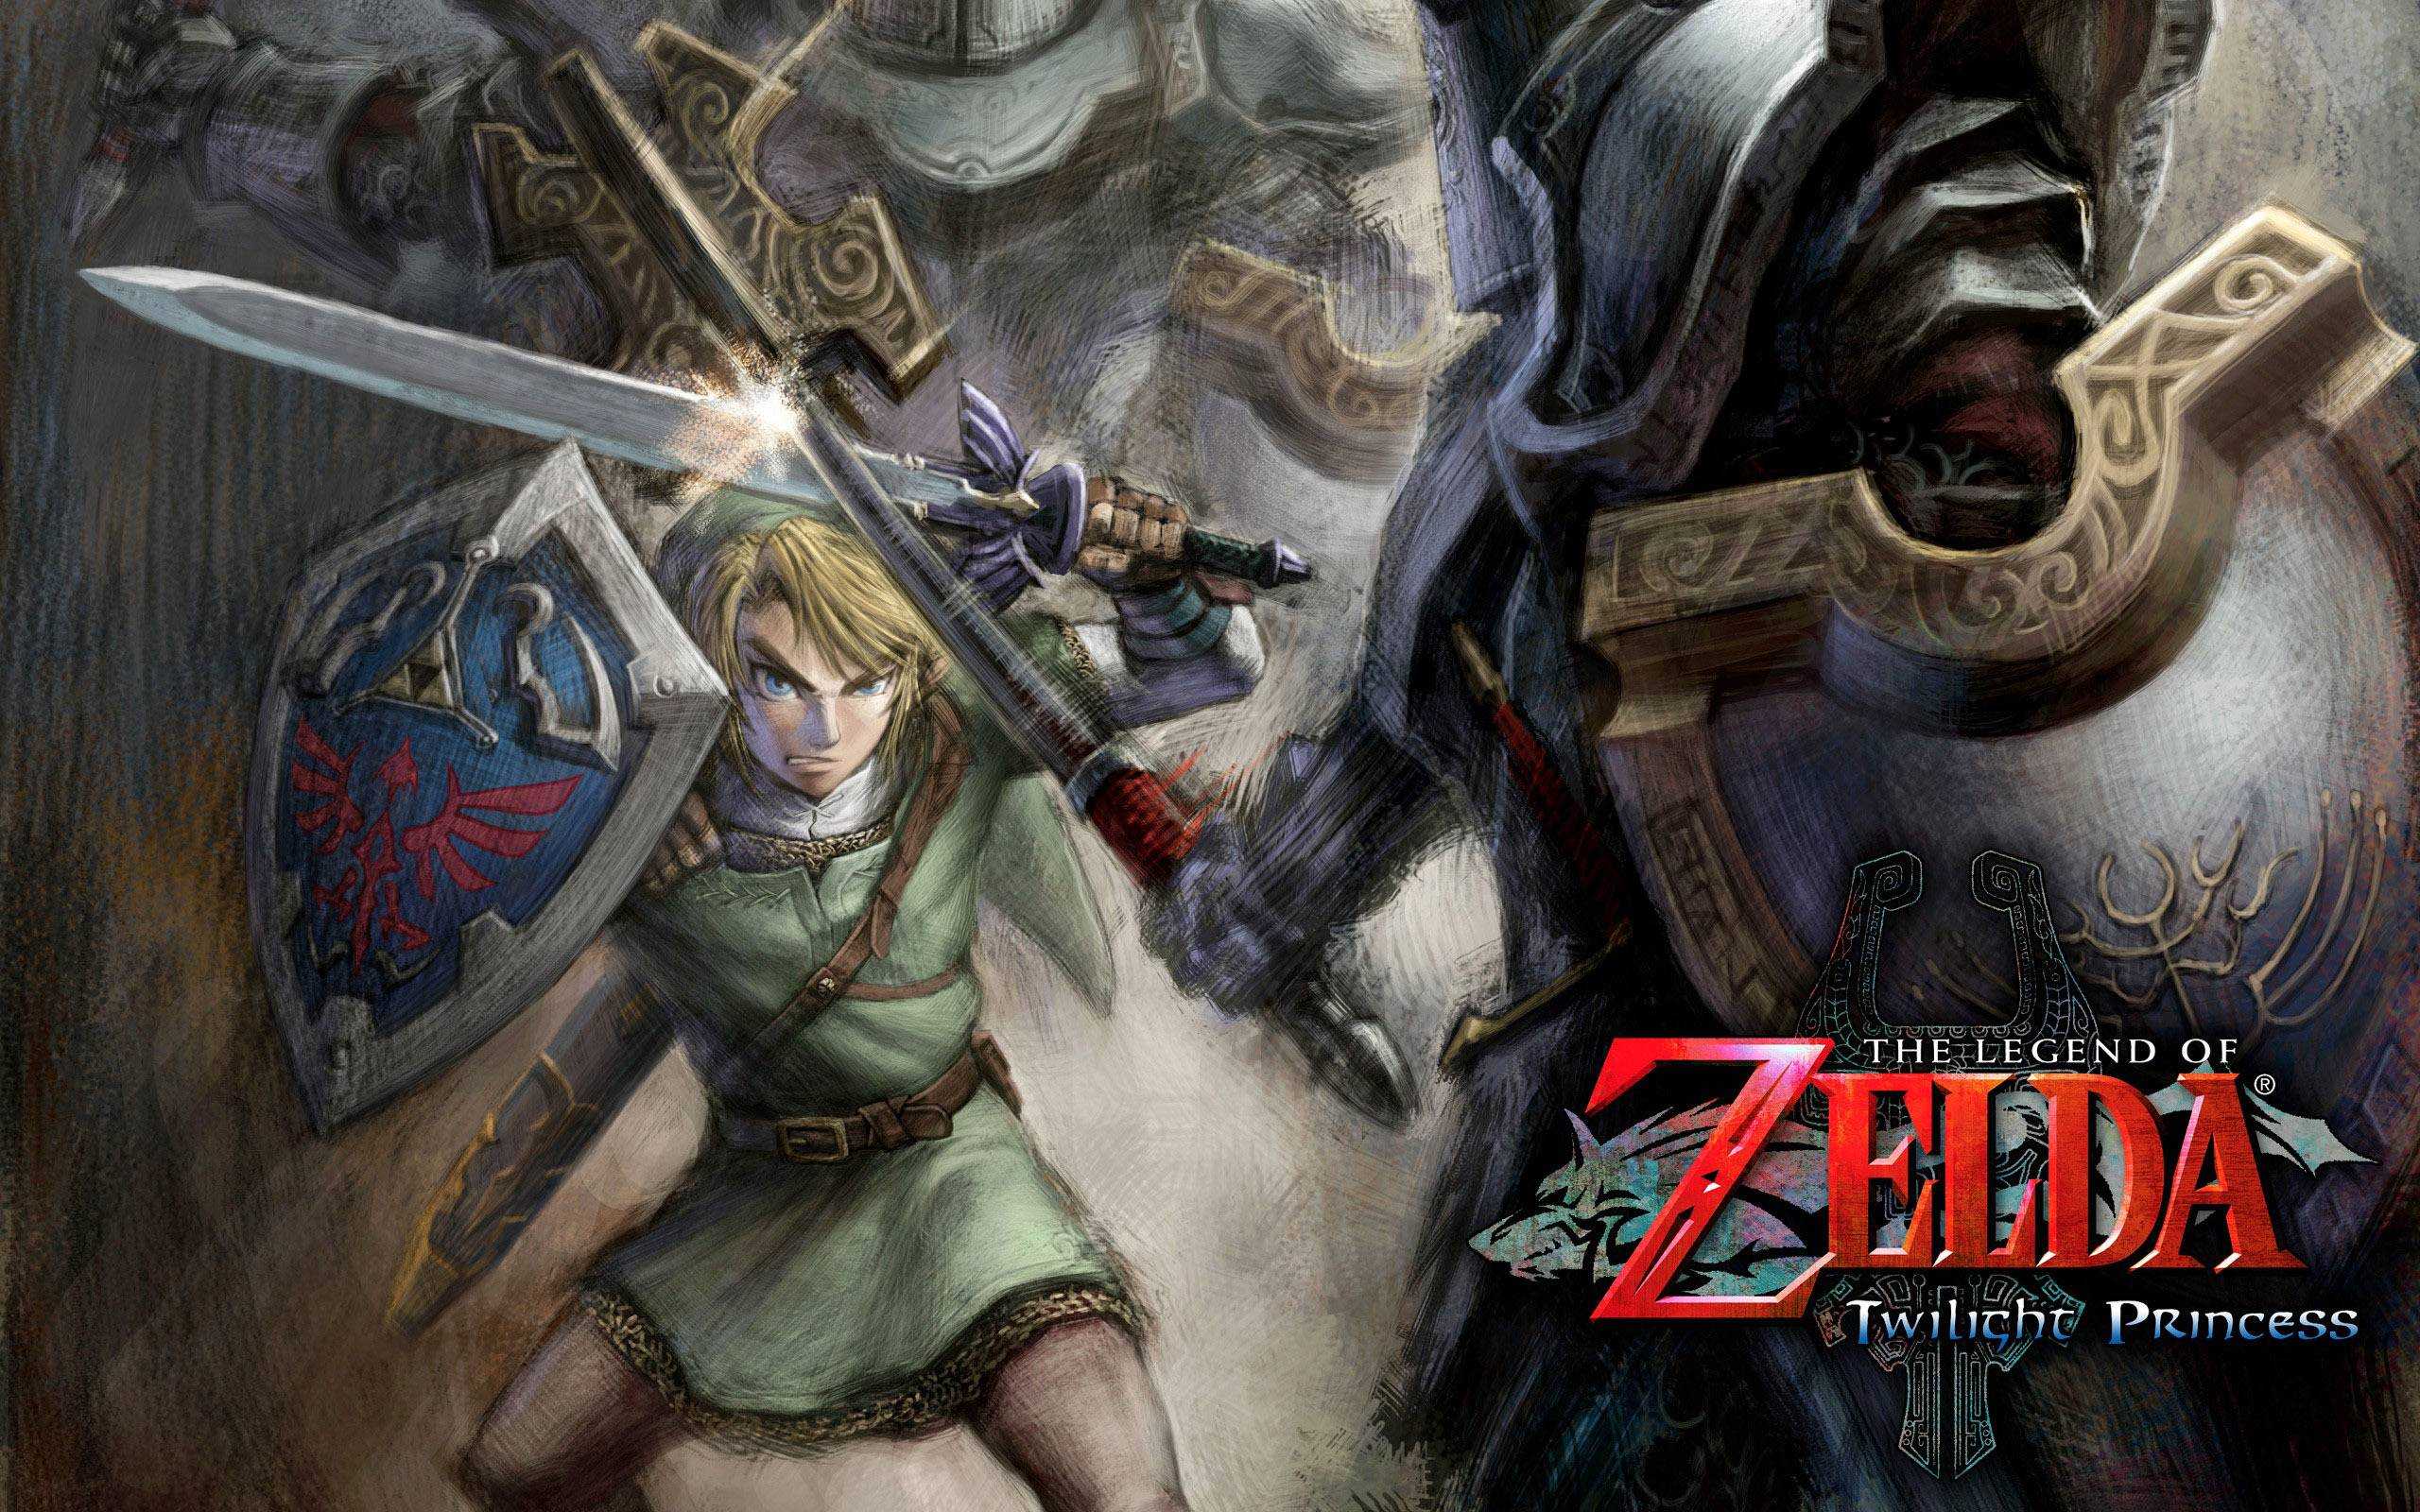 The Legend of Zelda Twilight Princess Wallpaper Free The Legend of Zelda Twilight Princess Background